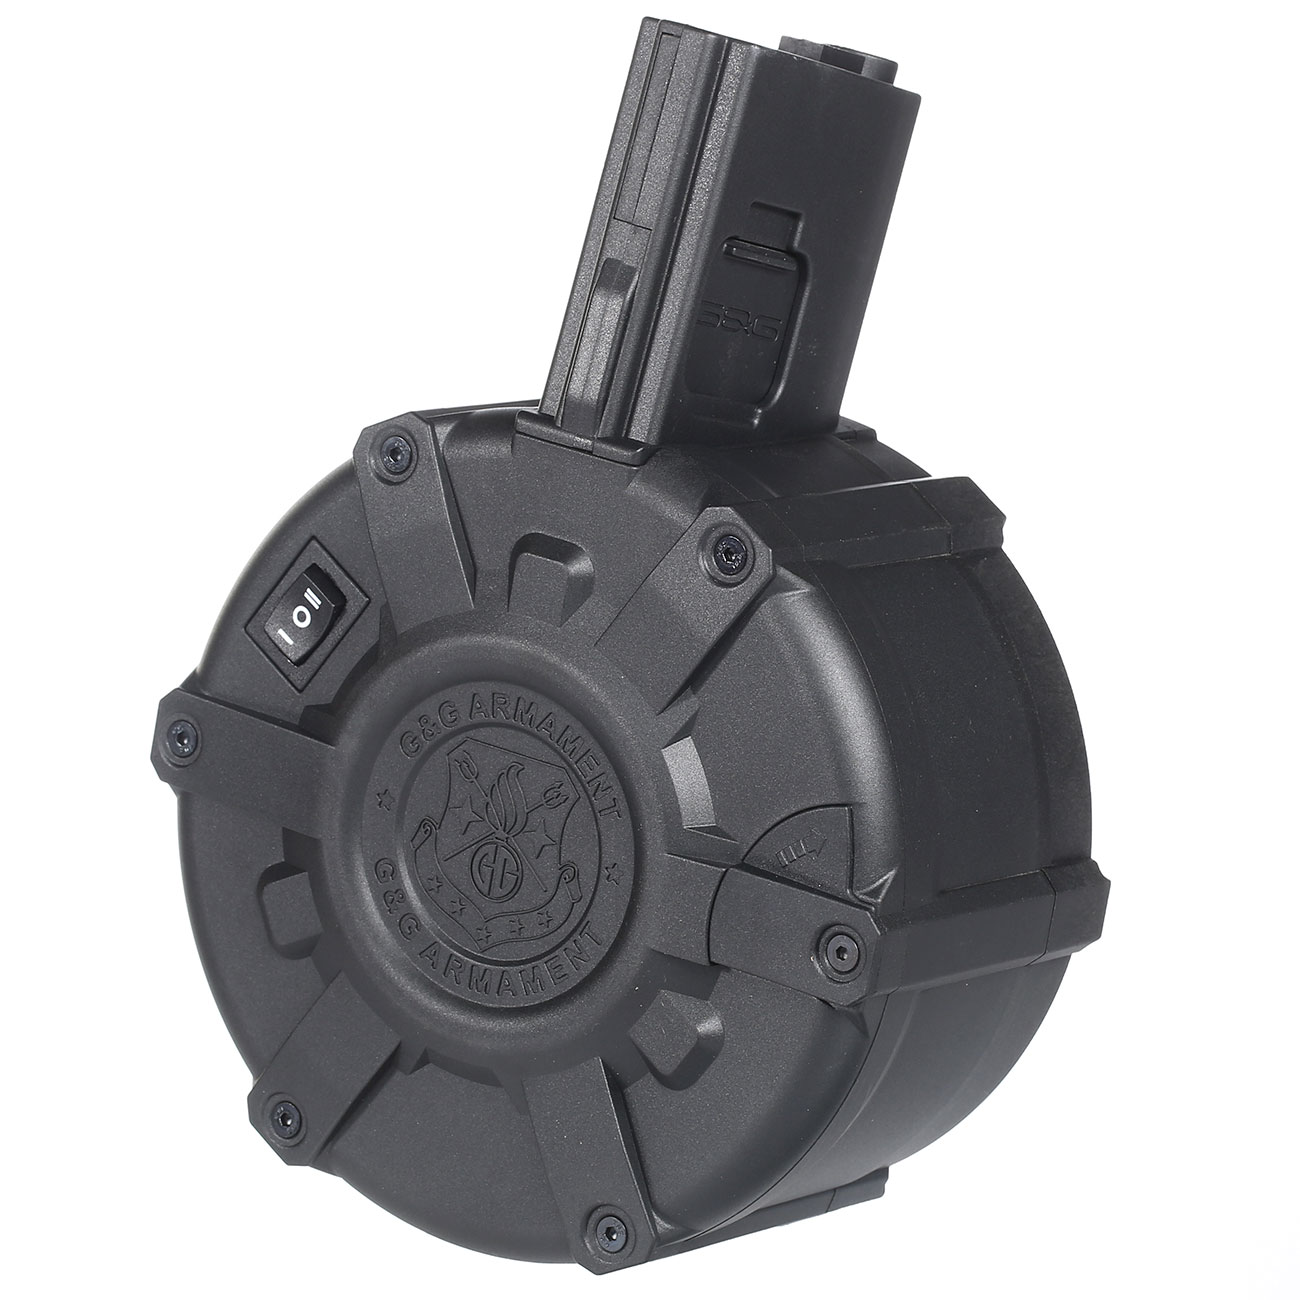 G&G M4 / M16 Auto-Winding Trommelmagazin Hi-Cap 2300 Schuss inkl. LiPo-Akku schwarz Bild 1